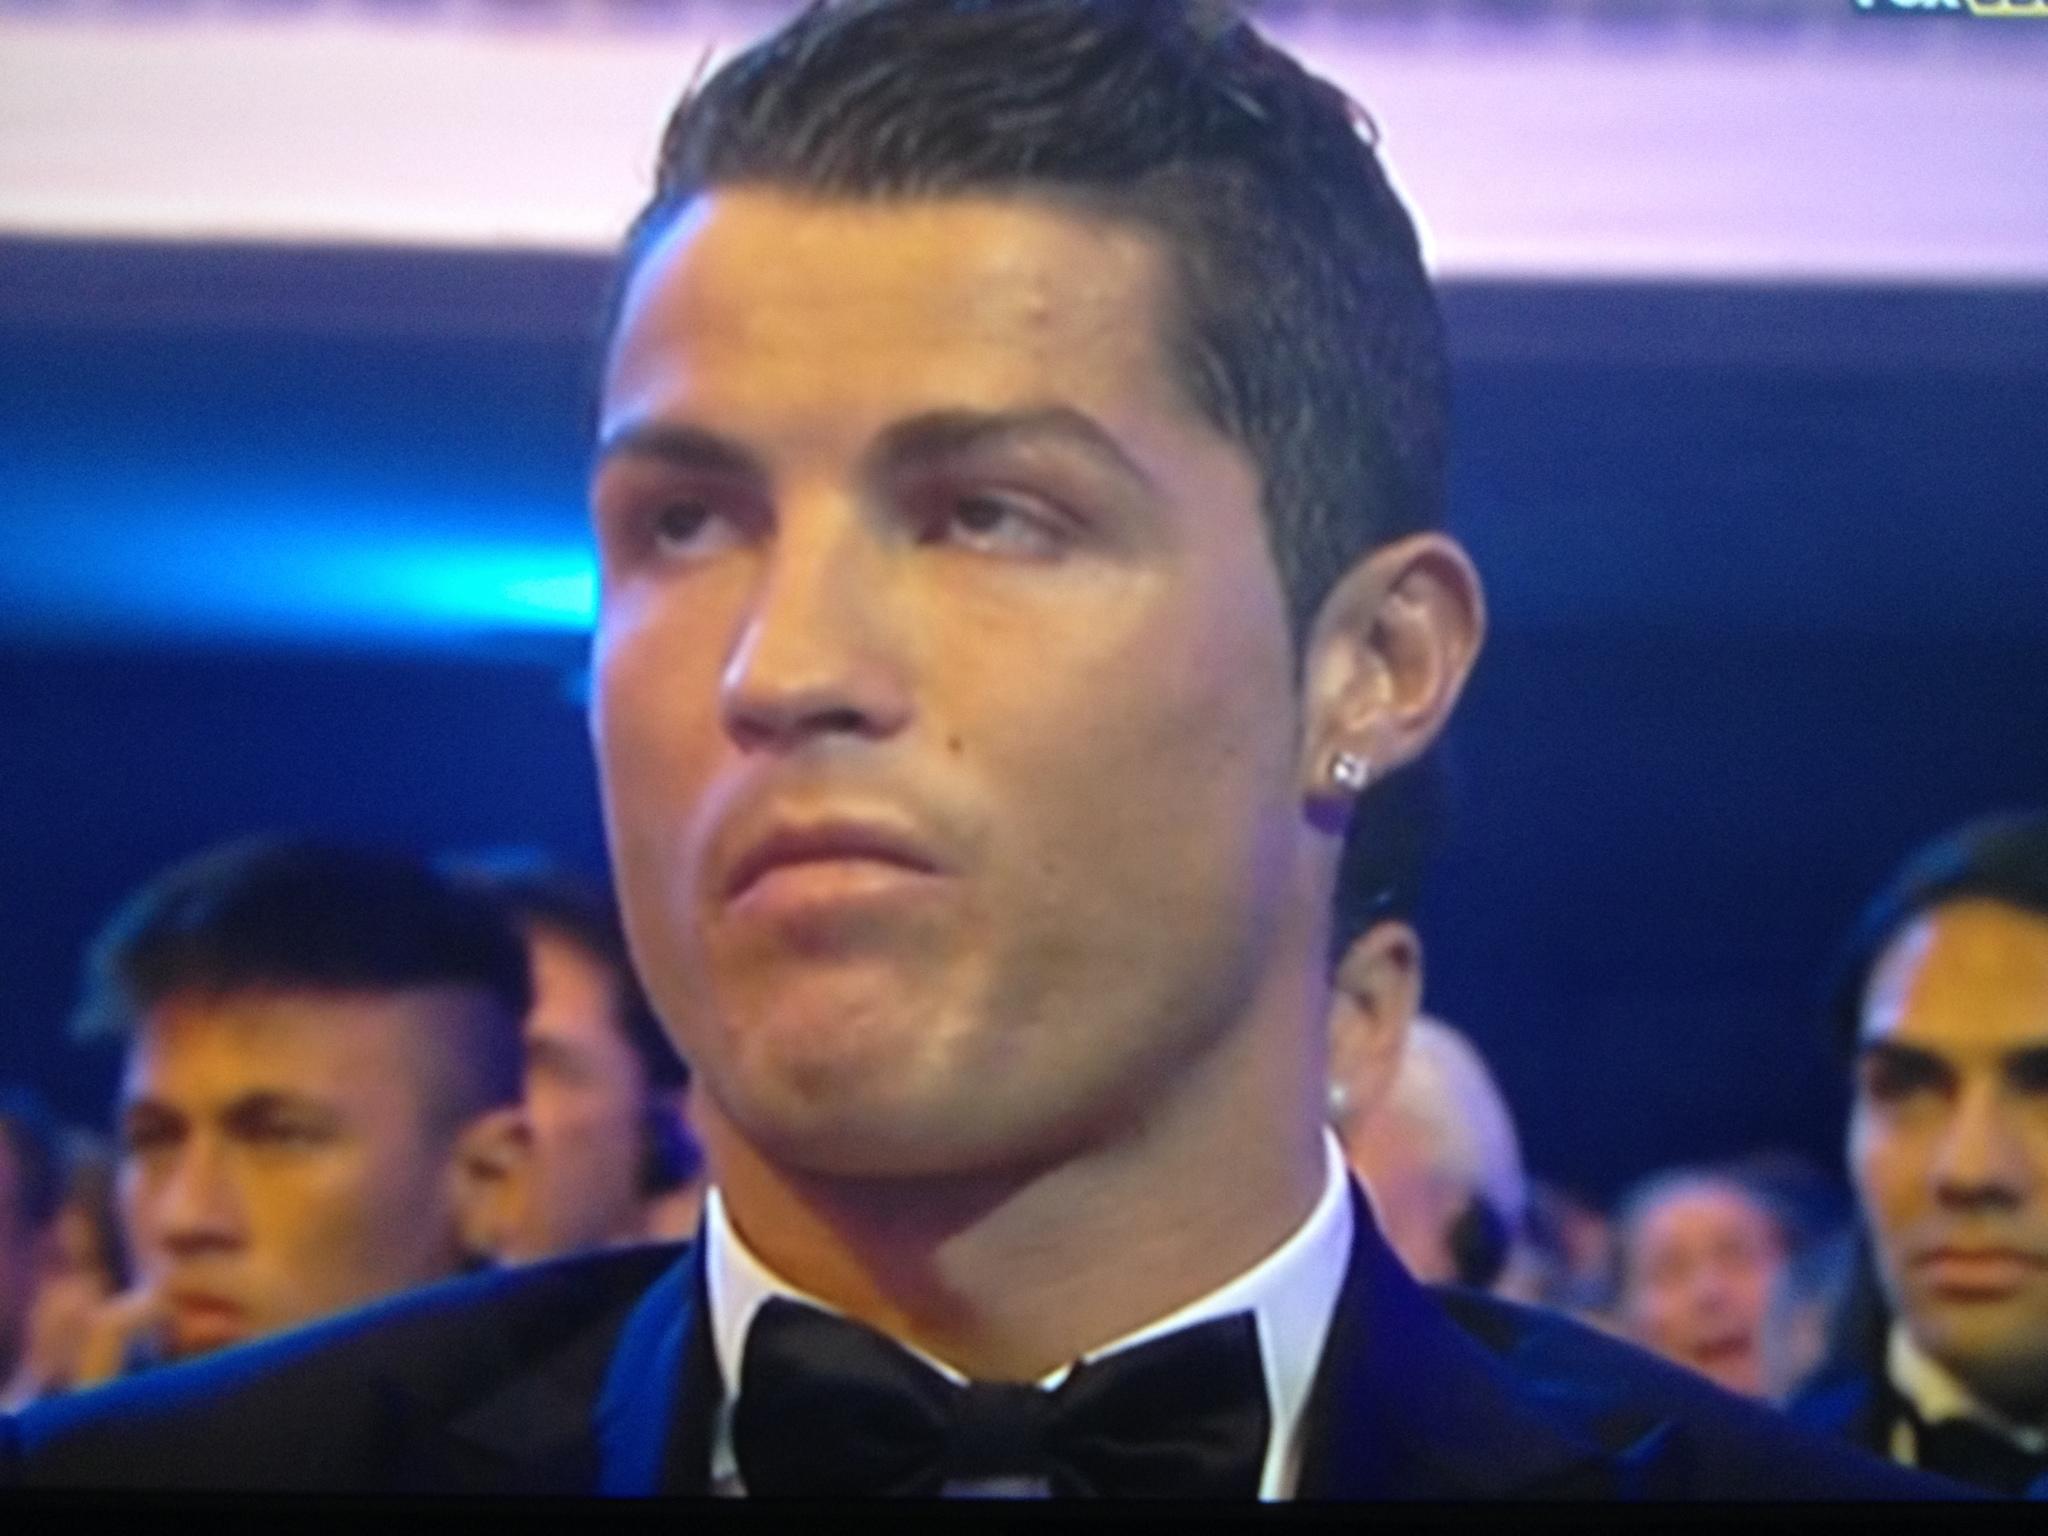 Cristiano Ronaldo reacts to Lionel Messi winning Ballon d'Or